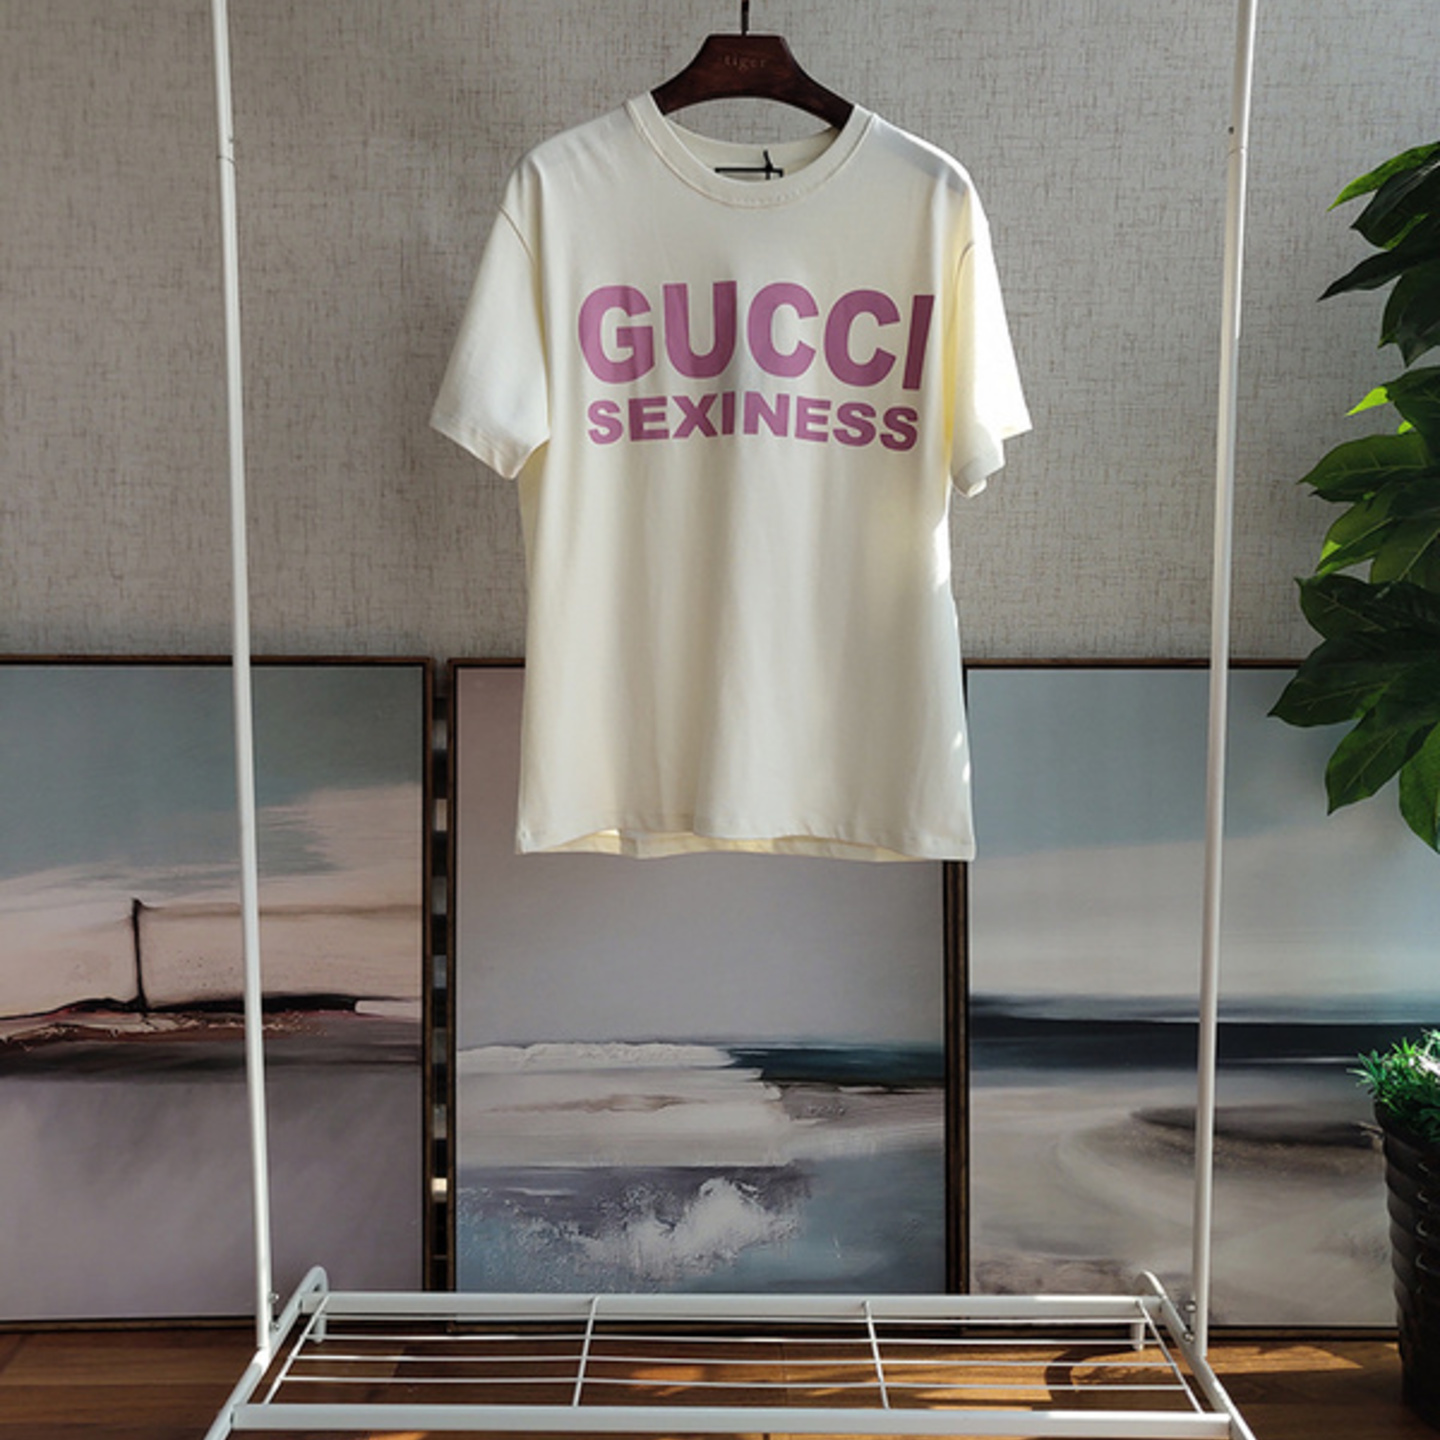 Gucci Sexiness print oversize T shirt